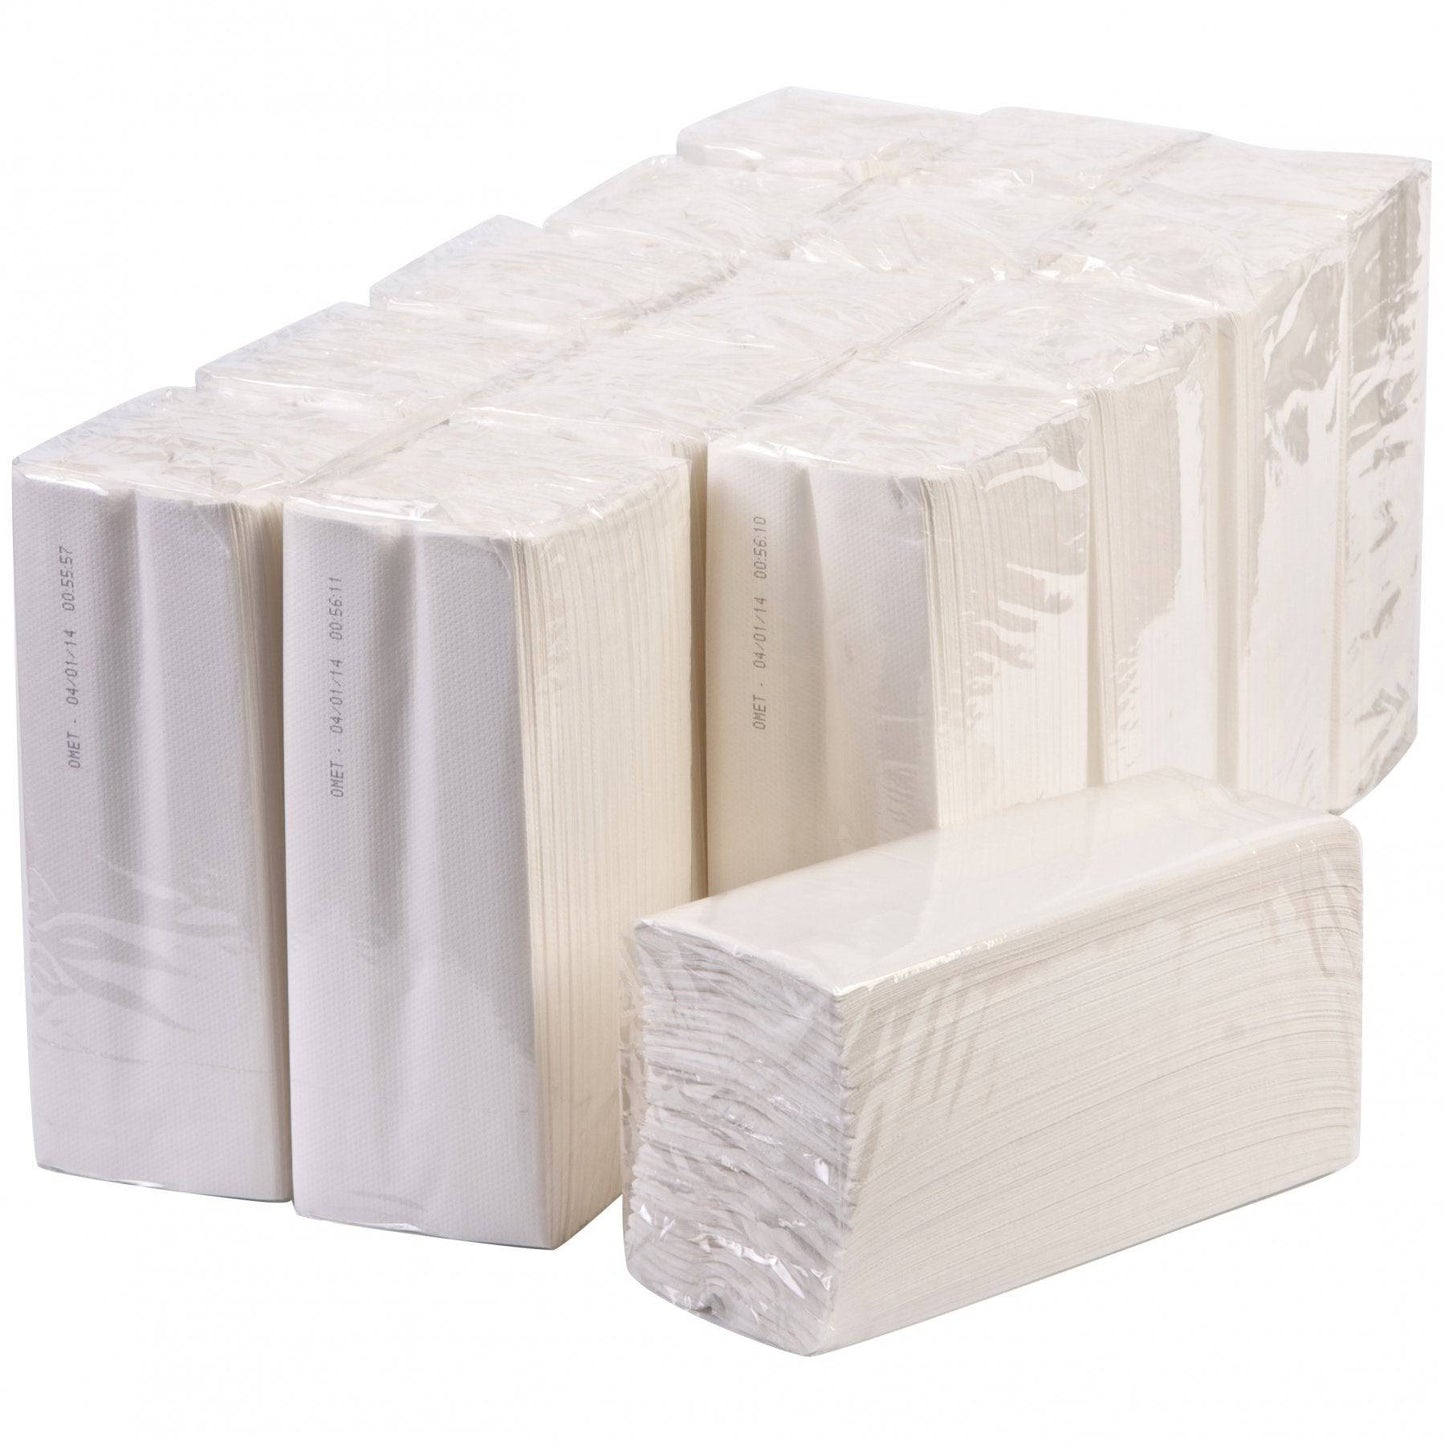 White C-Fold Paper Hand Towels : 2400 towels per box